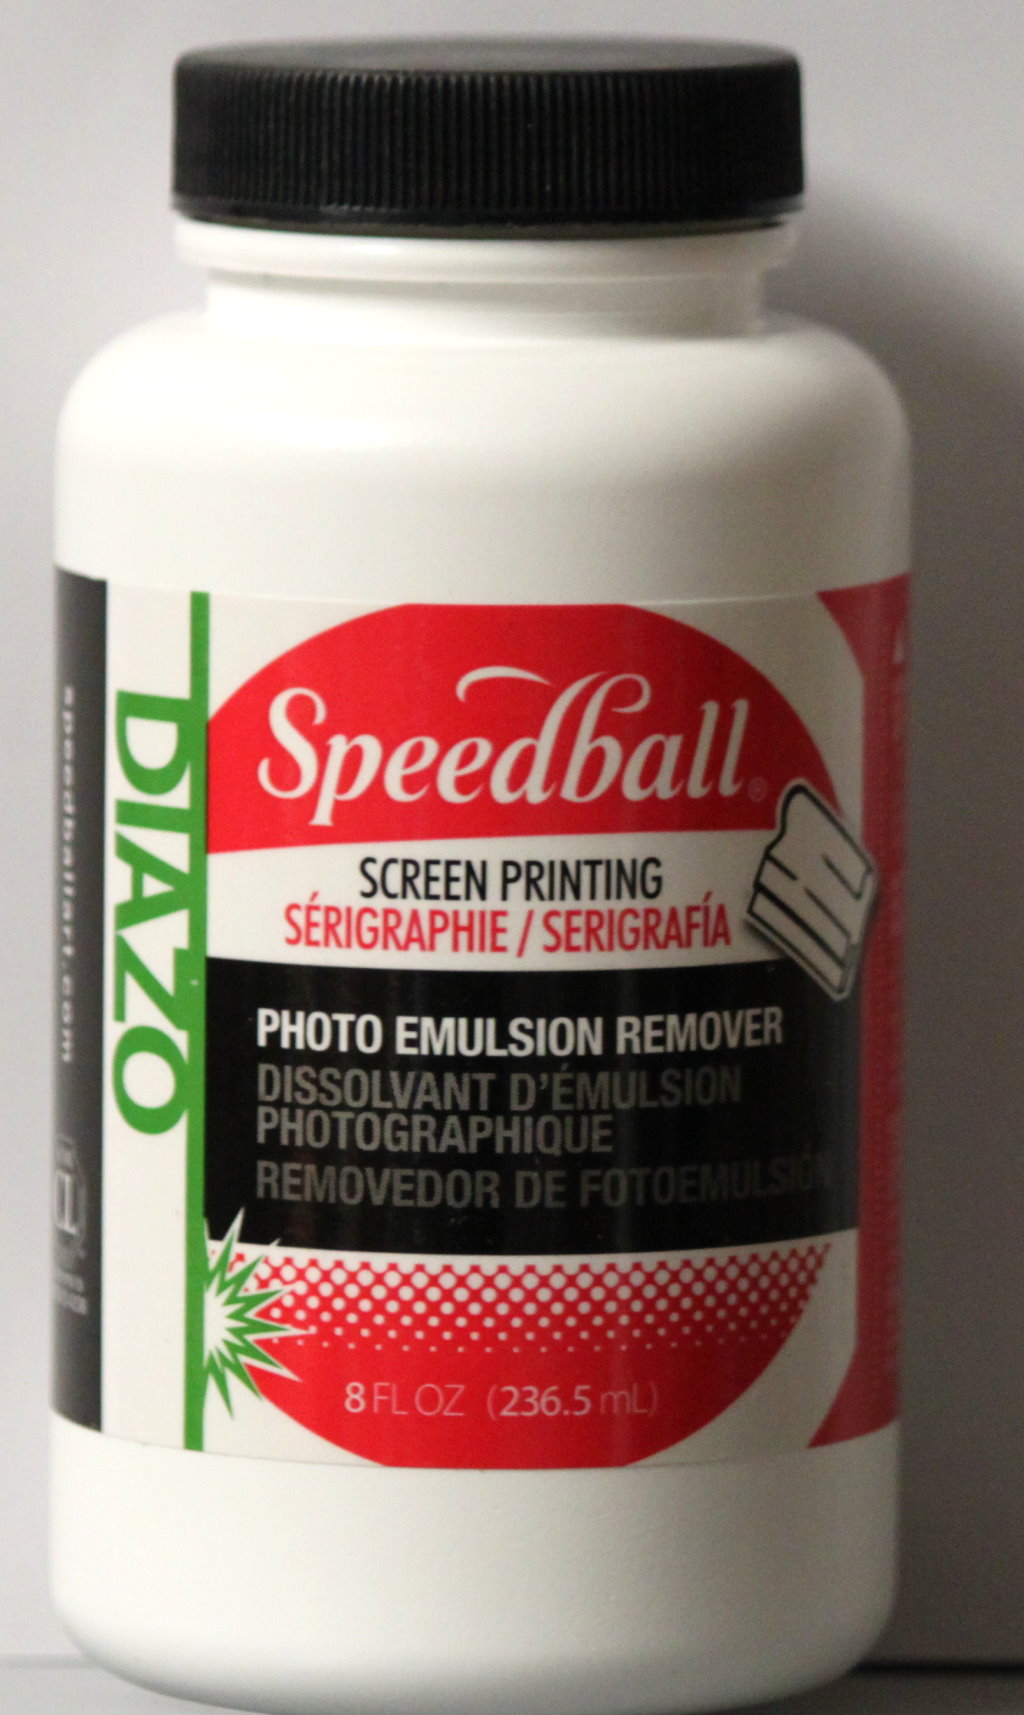 Diazo Speedball Screen Printing Photo Emulsion Remover